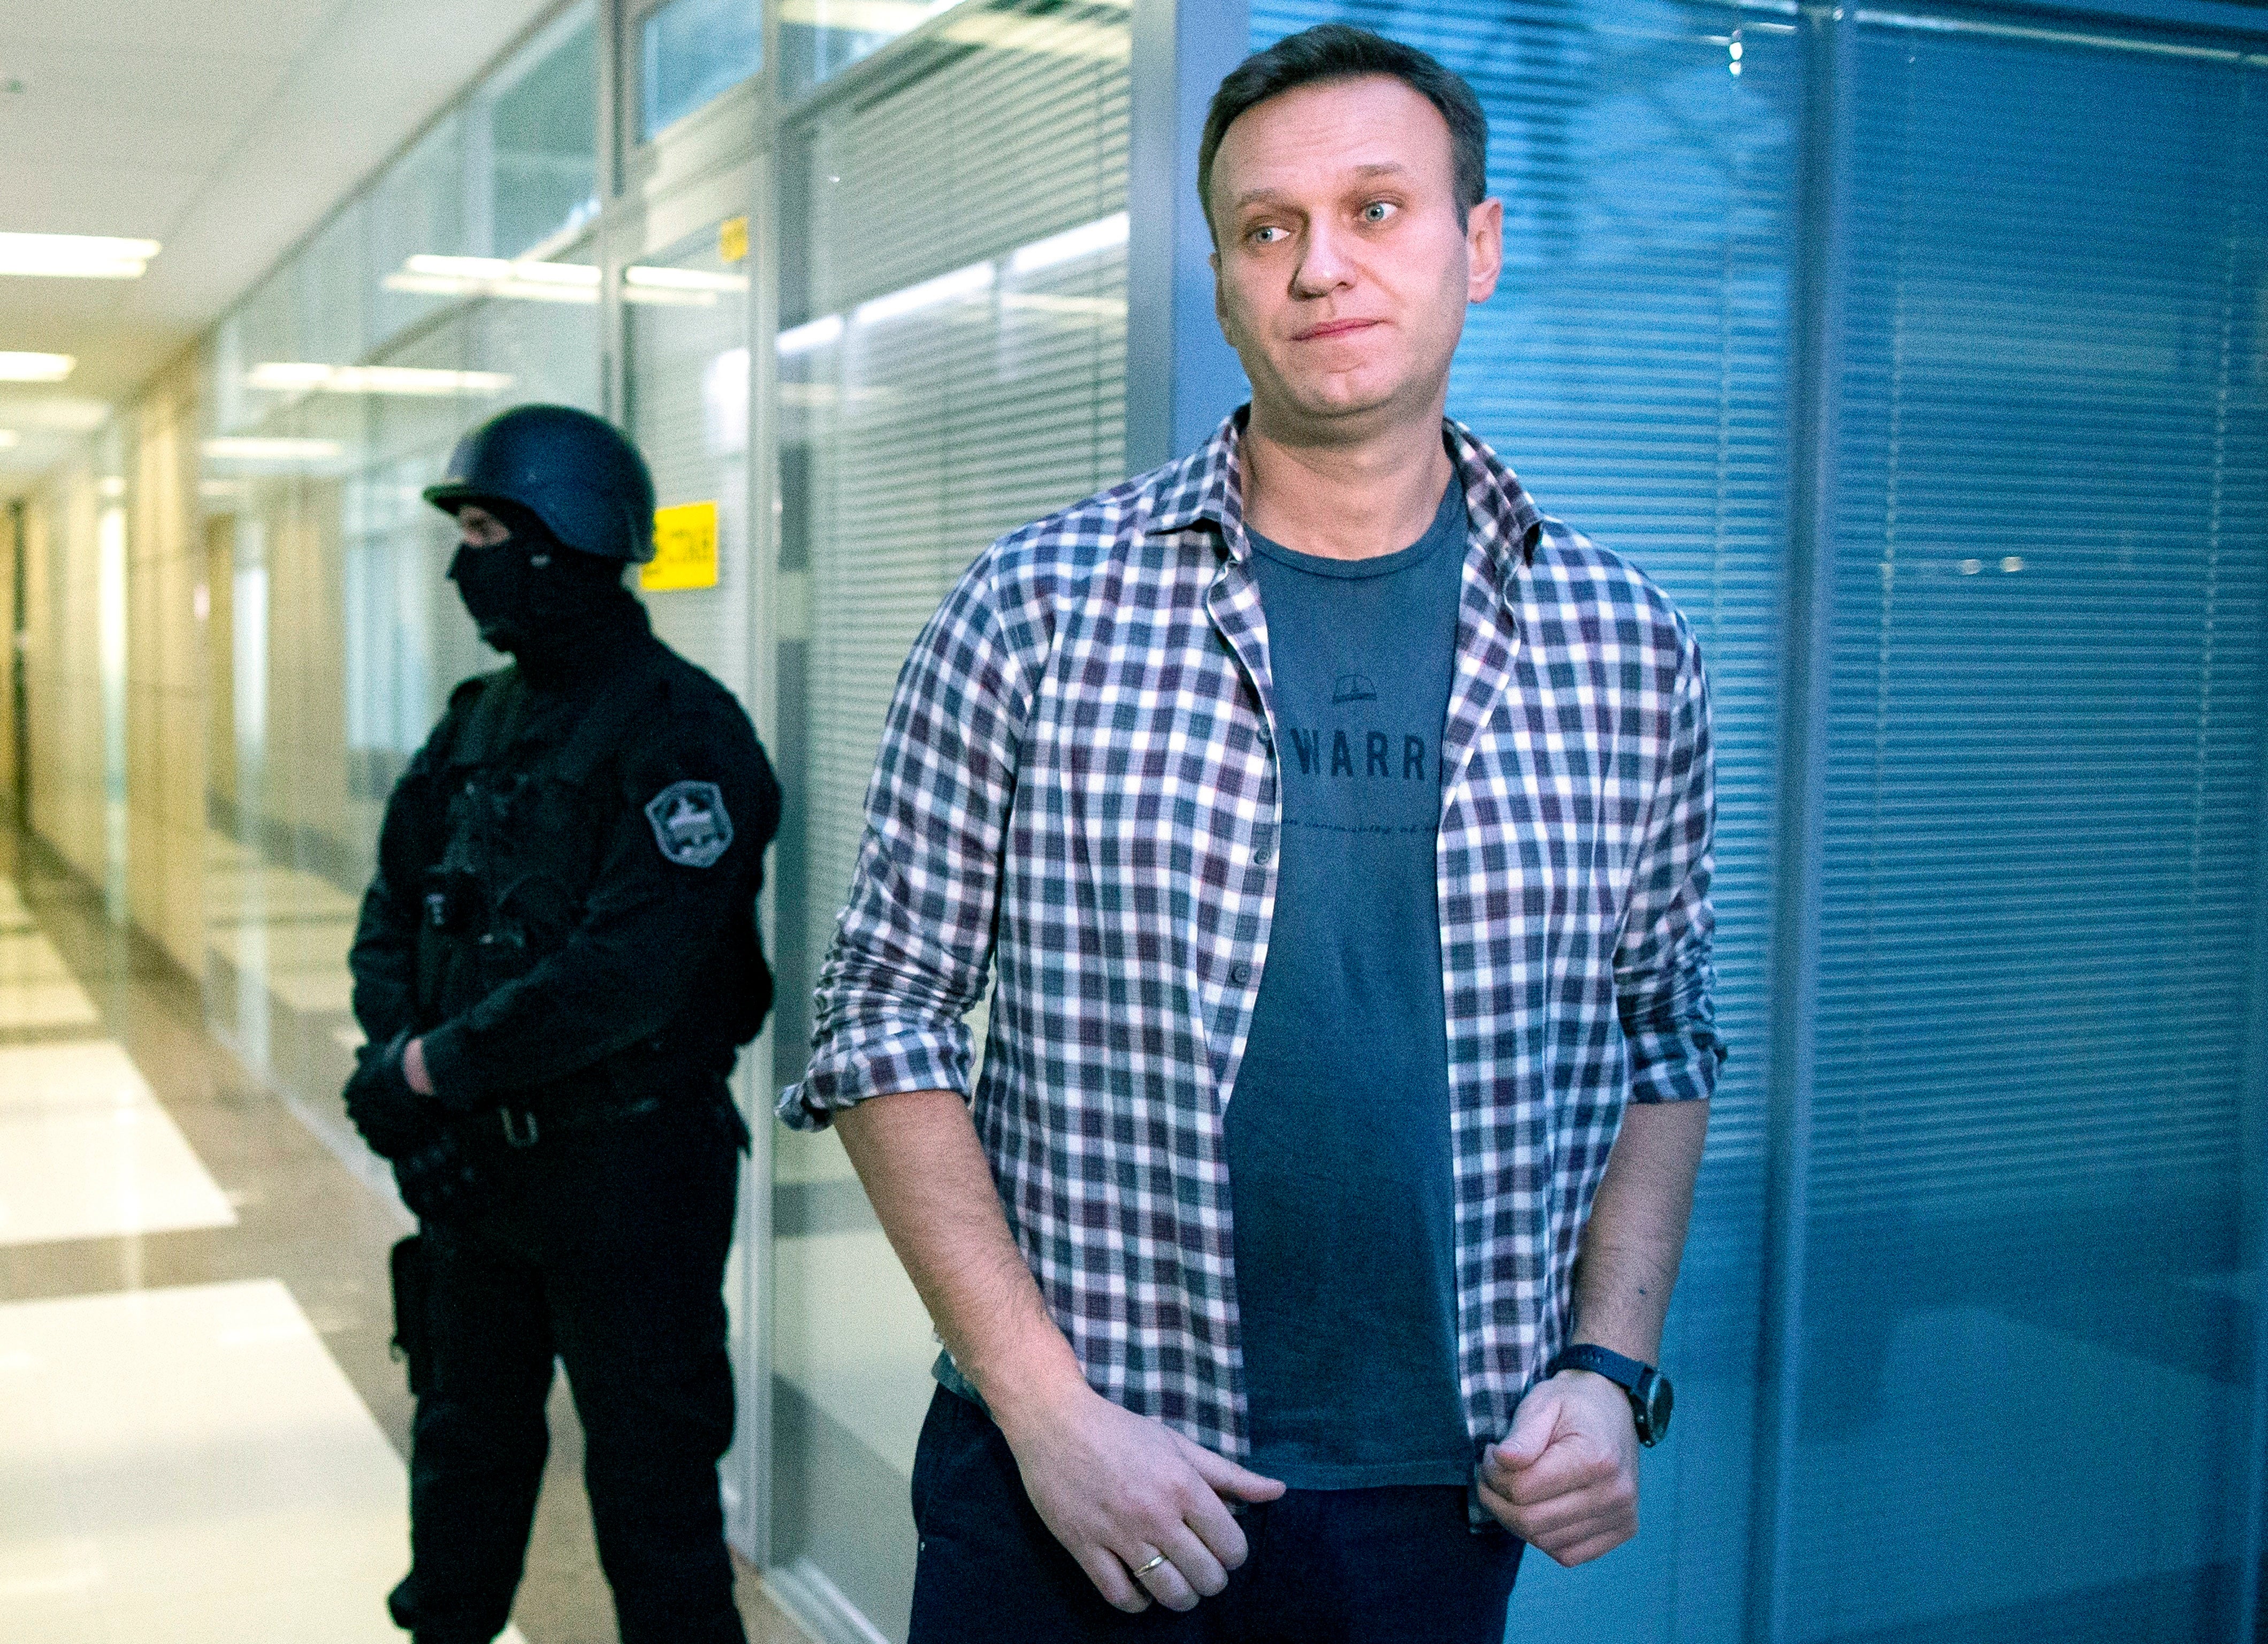 Critics believe Putin does not want Navalny to return home